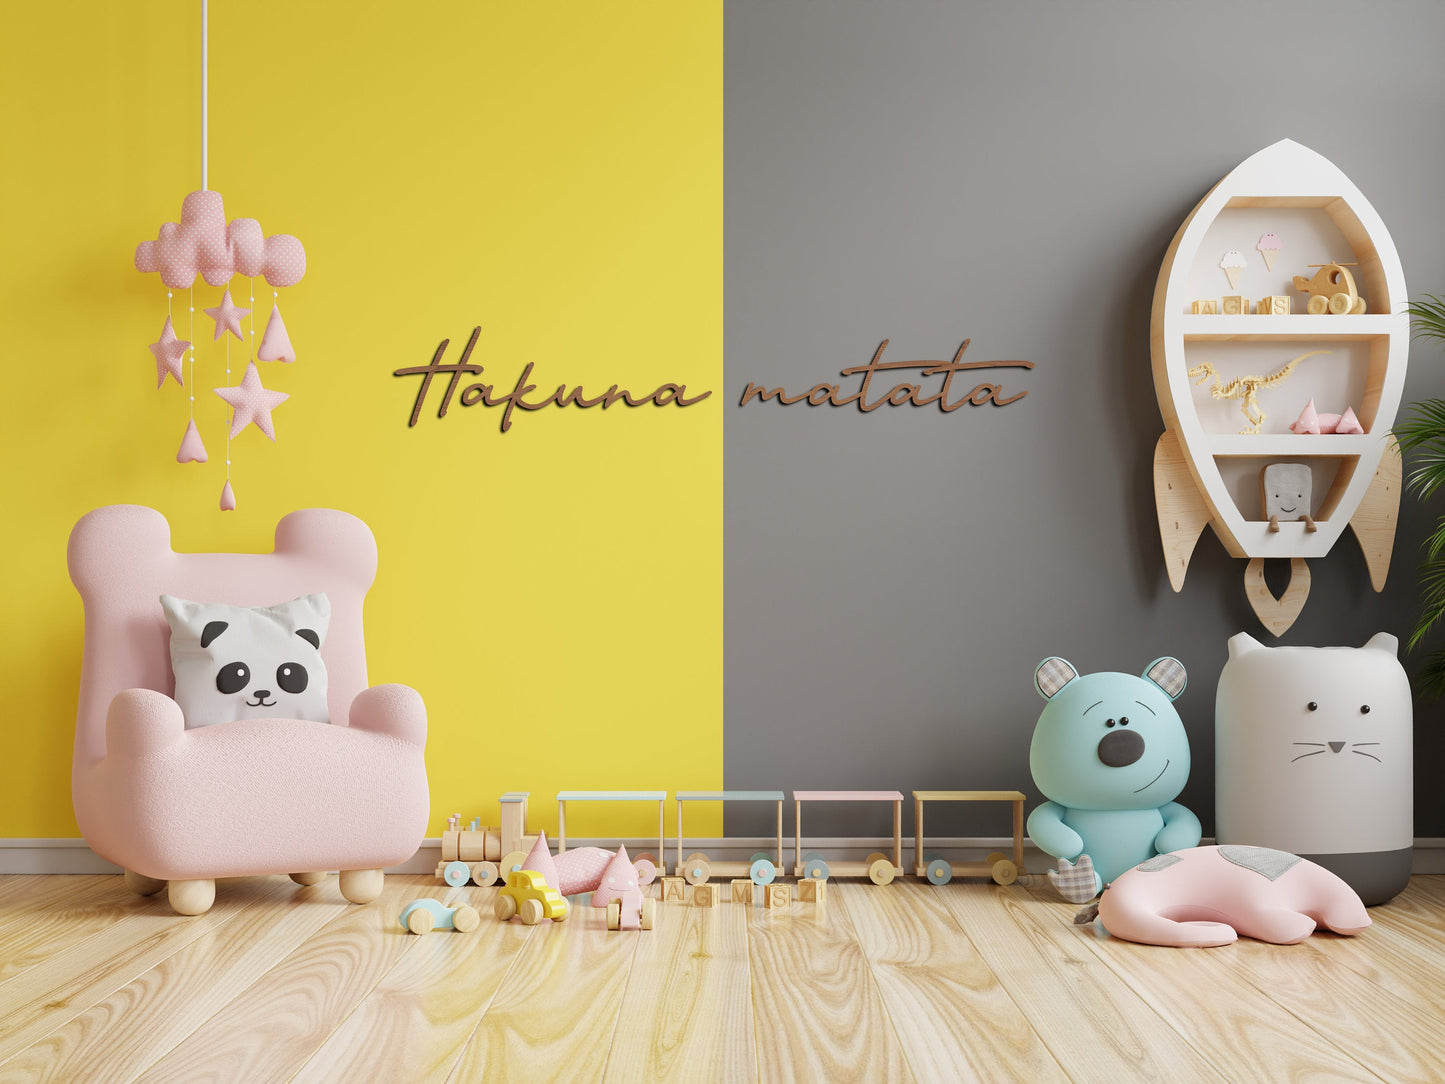 Unik4art - Wooden wall art home decor, Hakuna matata handwriting typography, livingroom bedroom nursery morden decor, lion king wooden decor